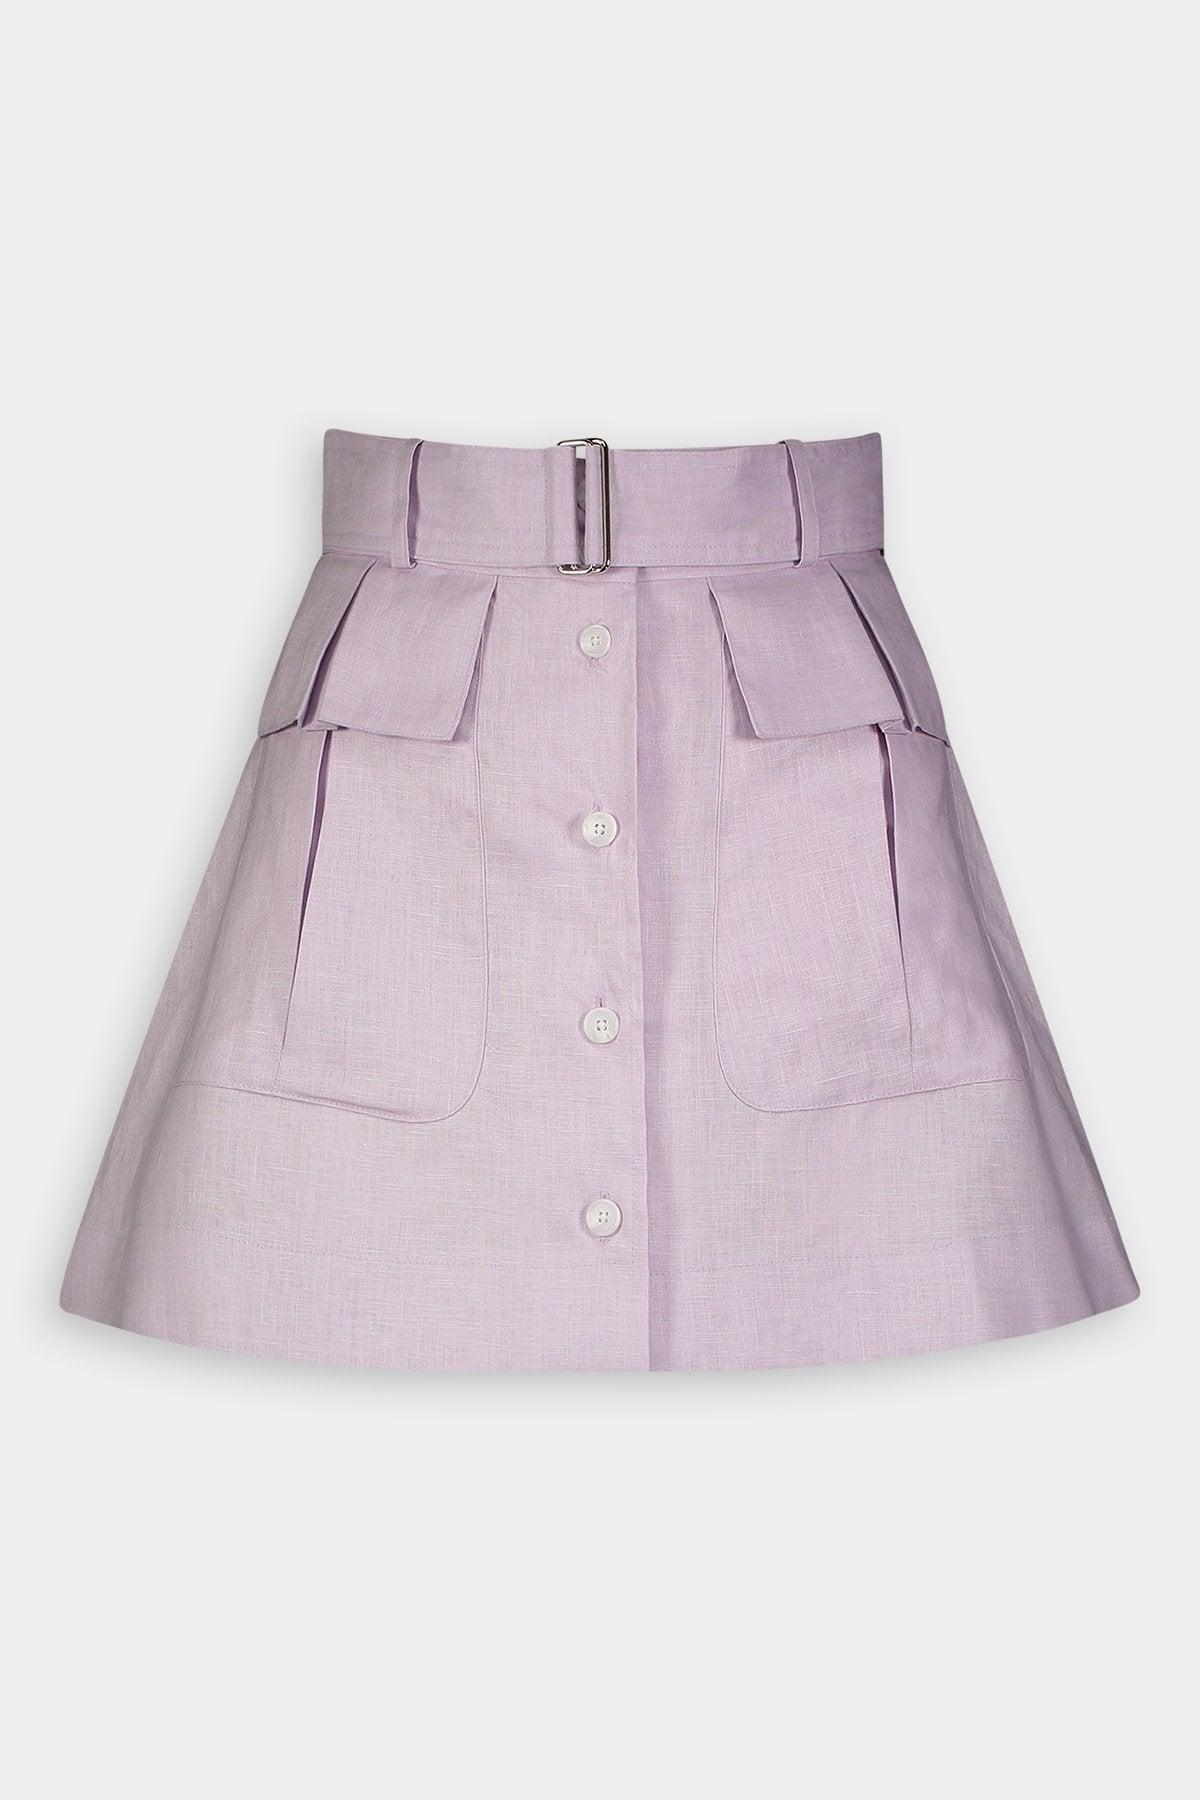 Matthew Bruch Cargo Mini Skirt In Lavender in Purple | Lyst